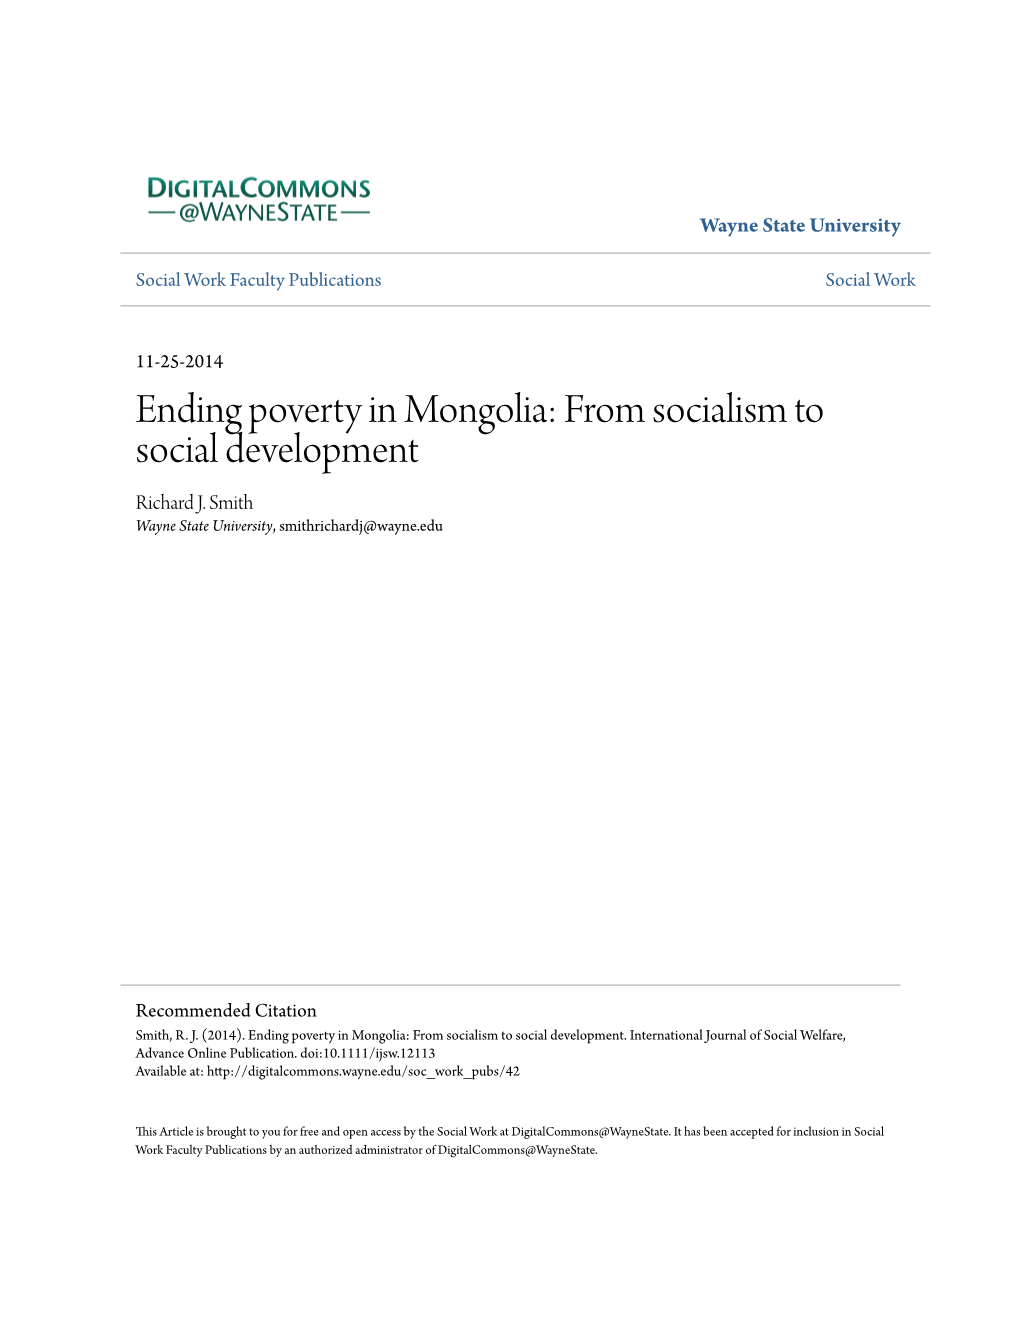 Ending Poverty in Mongolia: from Socialism to Social Development Richard J